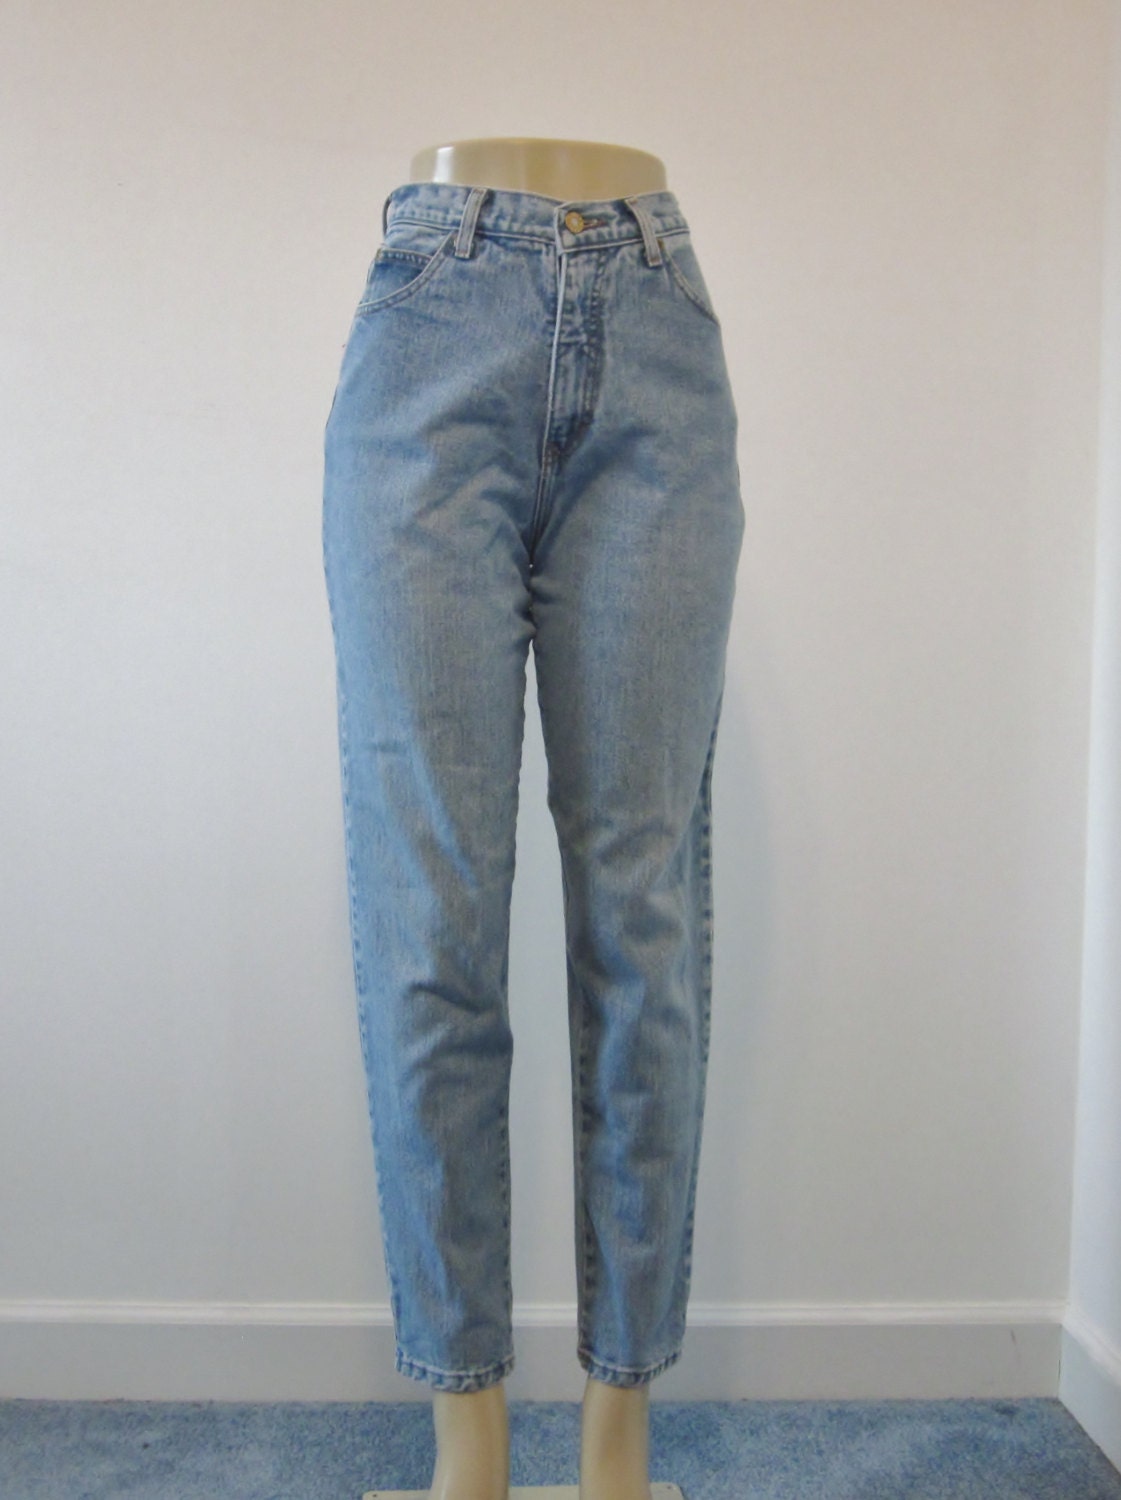 prodigymept - tapered leg jeans vs skinny jeans